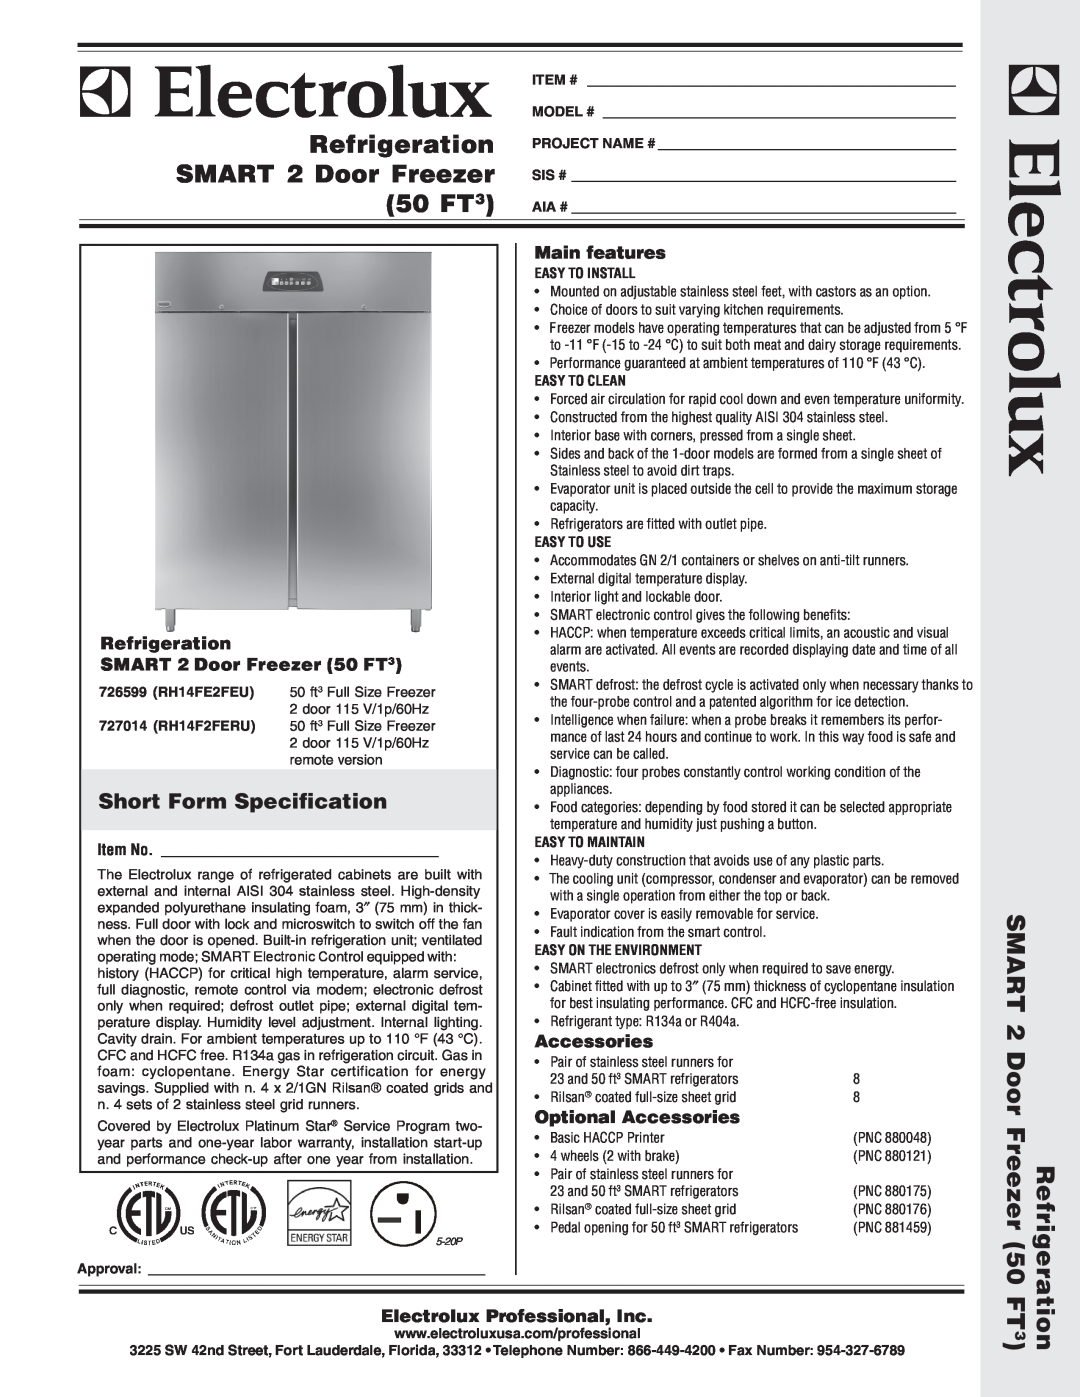 Electrolux RH14F2FERU warranty Short Form Specification, Main features, Refrigeration, SMART 2 Door Freezer 50 FT3 